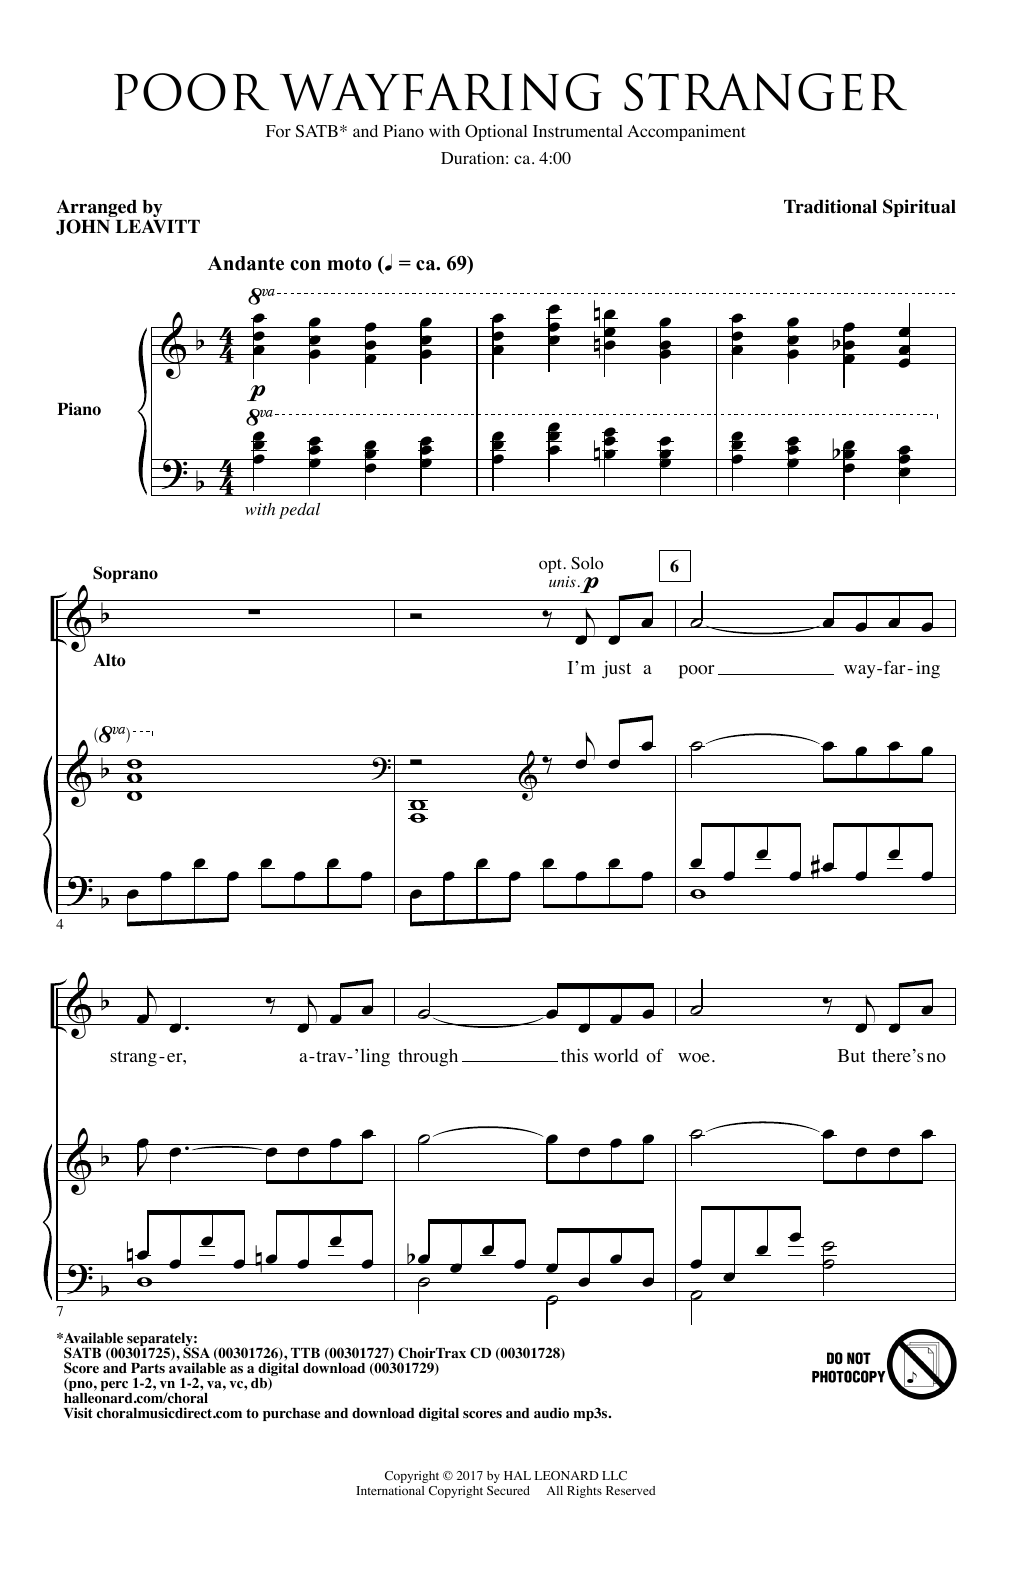 Download Traditional Spiritual Poor Wayfaring Stranger (arr. John Leavitt) Sheet Music and learn how to play TTBB Choir PDF digital score in minutes